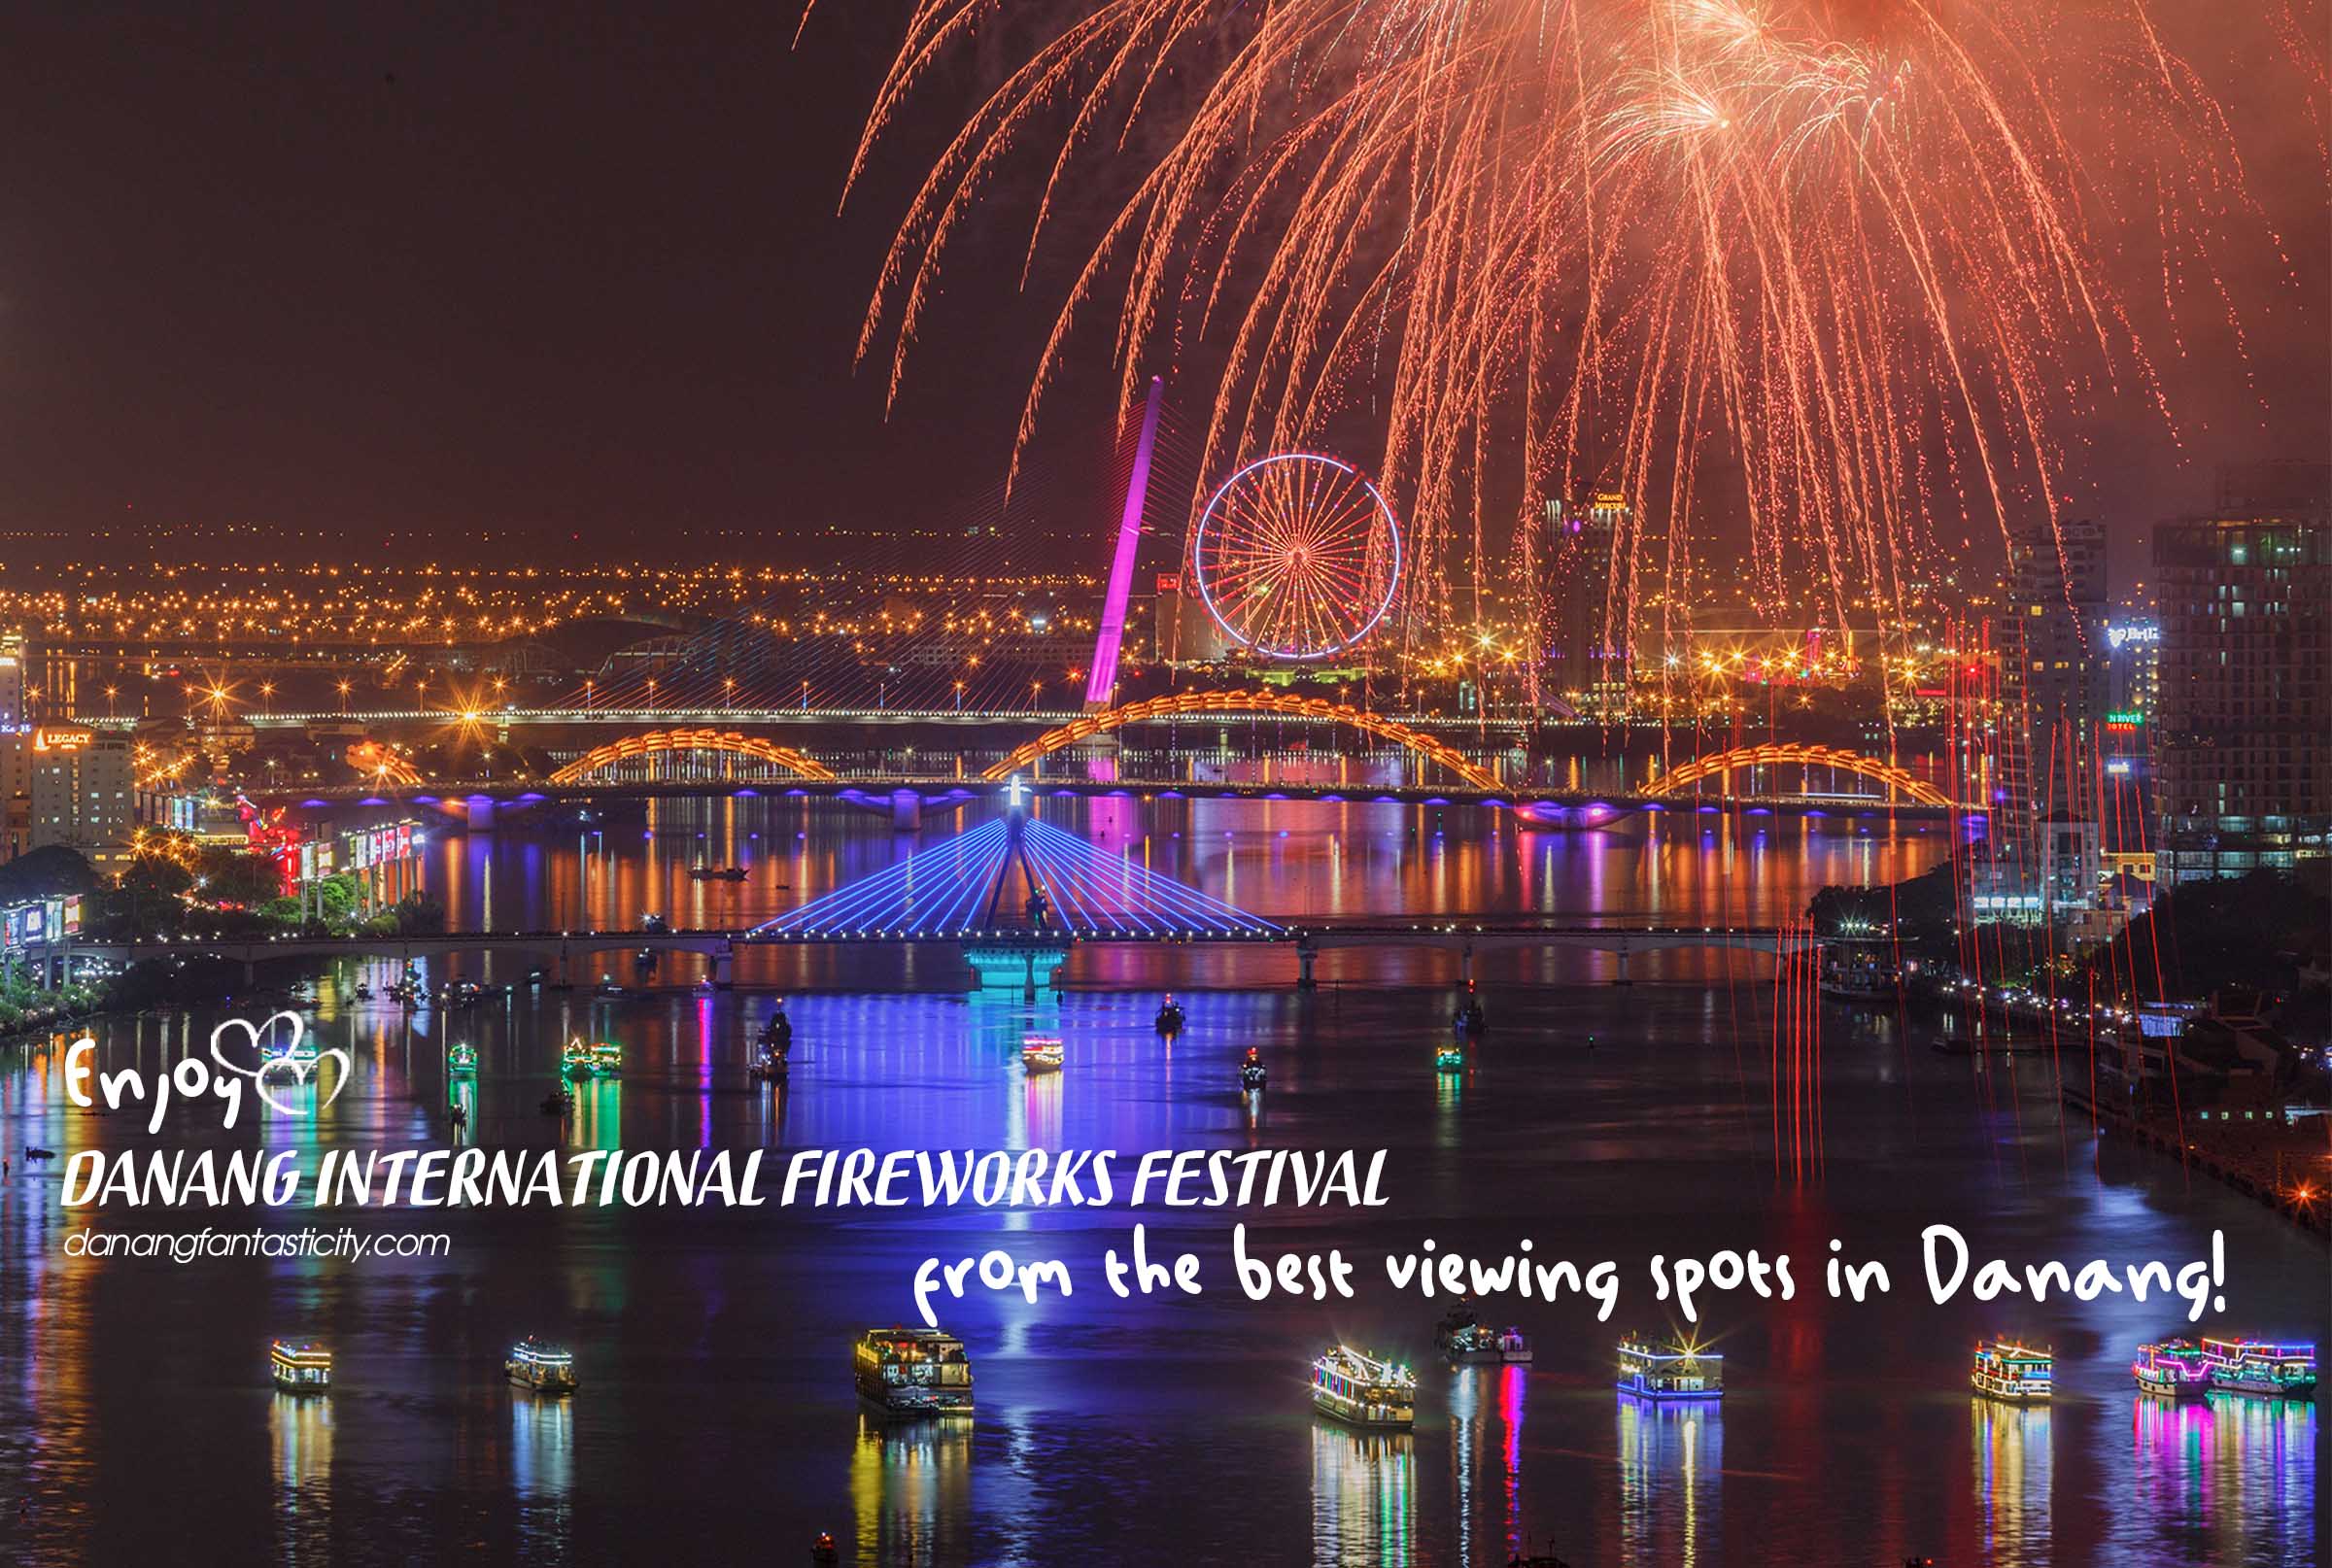 Enjoy Danang International Fireworks Festival From The Best Viewing Spots In Danang